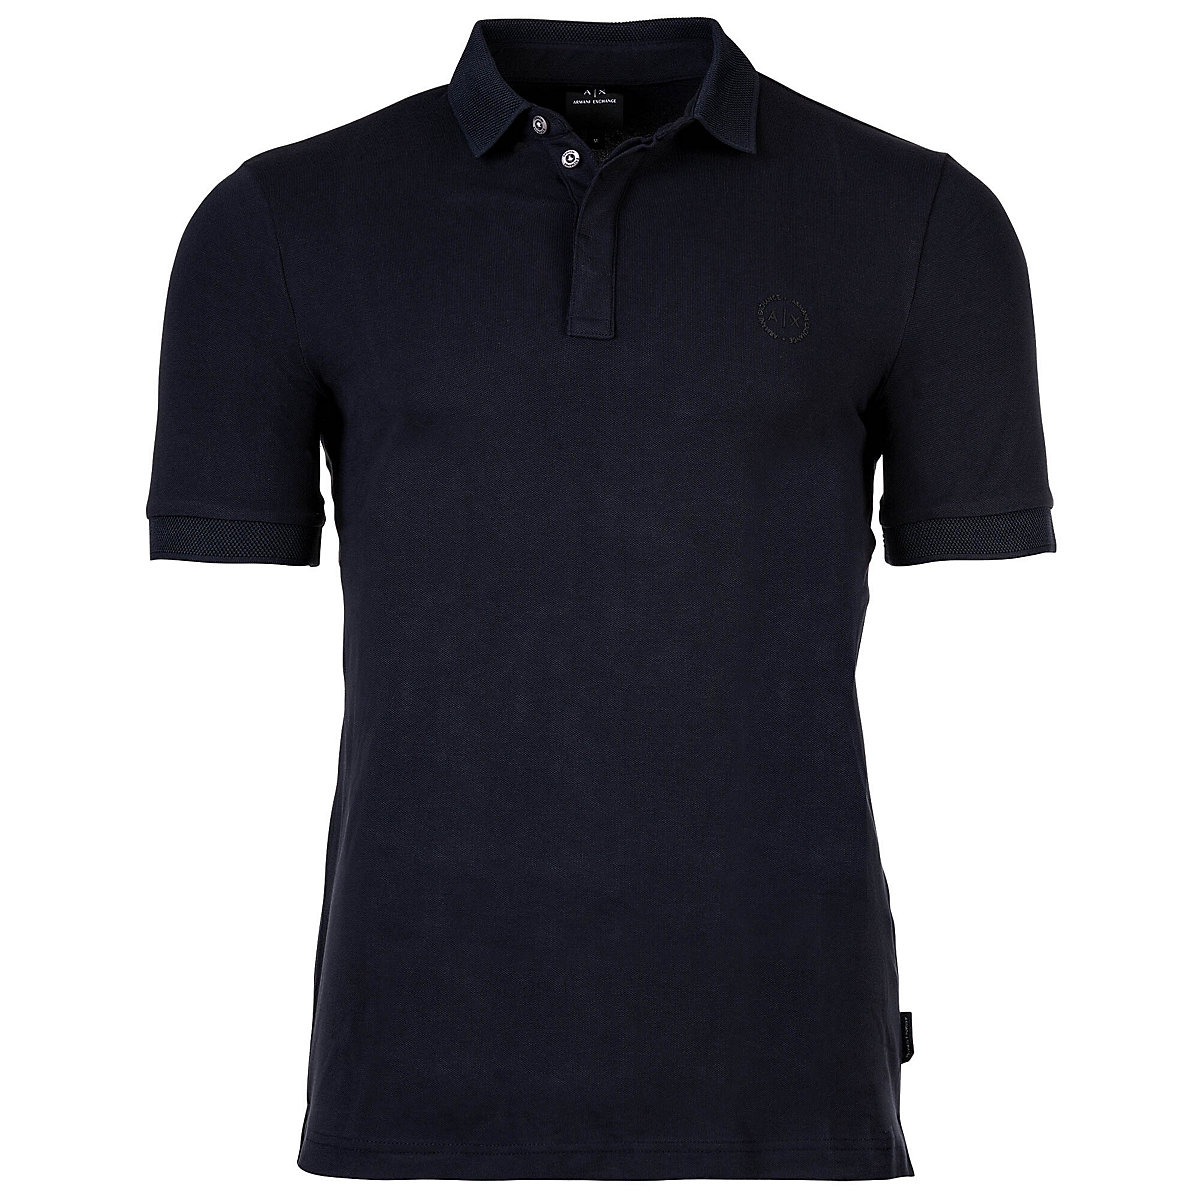 ARMANI EXCHANGE A|X Herren Poloshirt Slim fit einfarbig Cotton Stretch Poloshirts blau